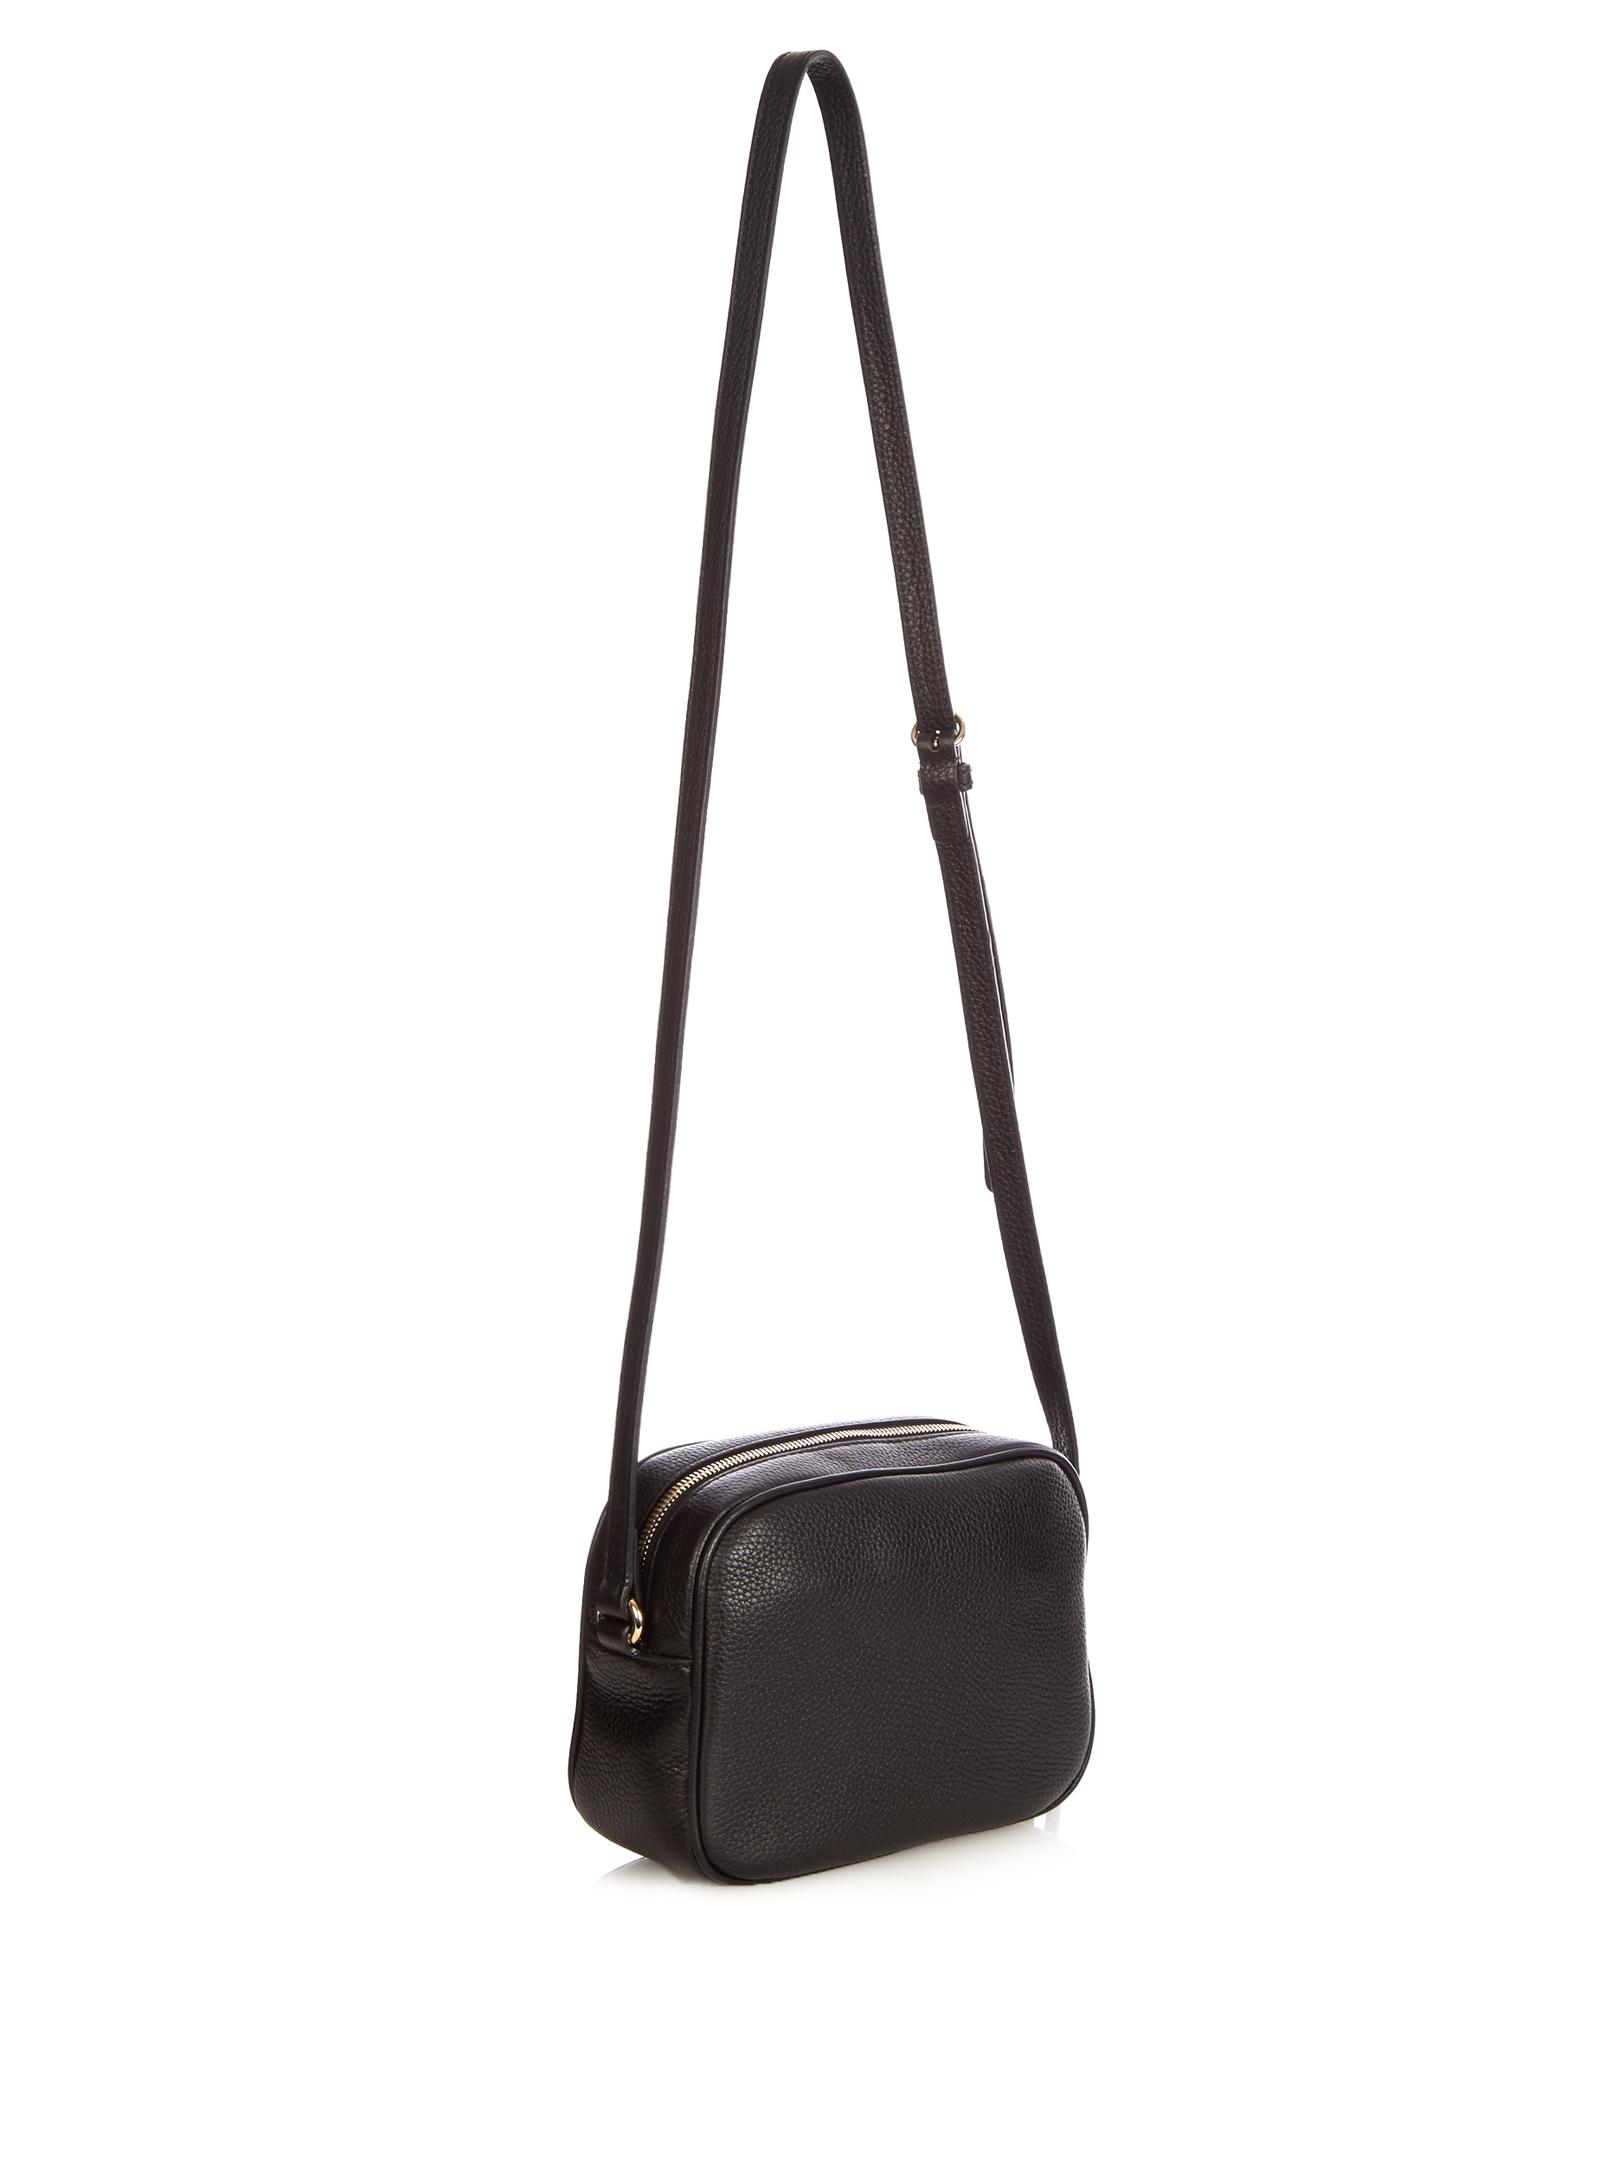 Gucci Soho Disco Leather Shoulder Bag in Black - Lyst